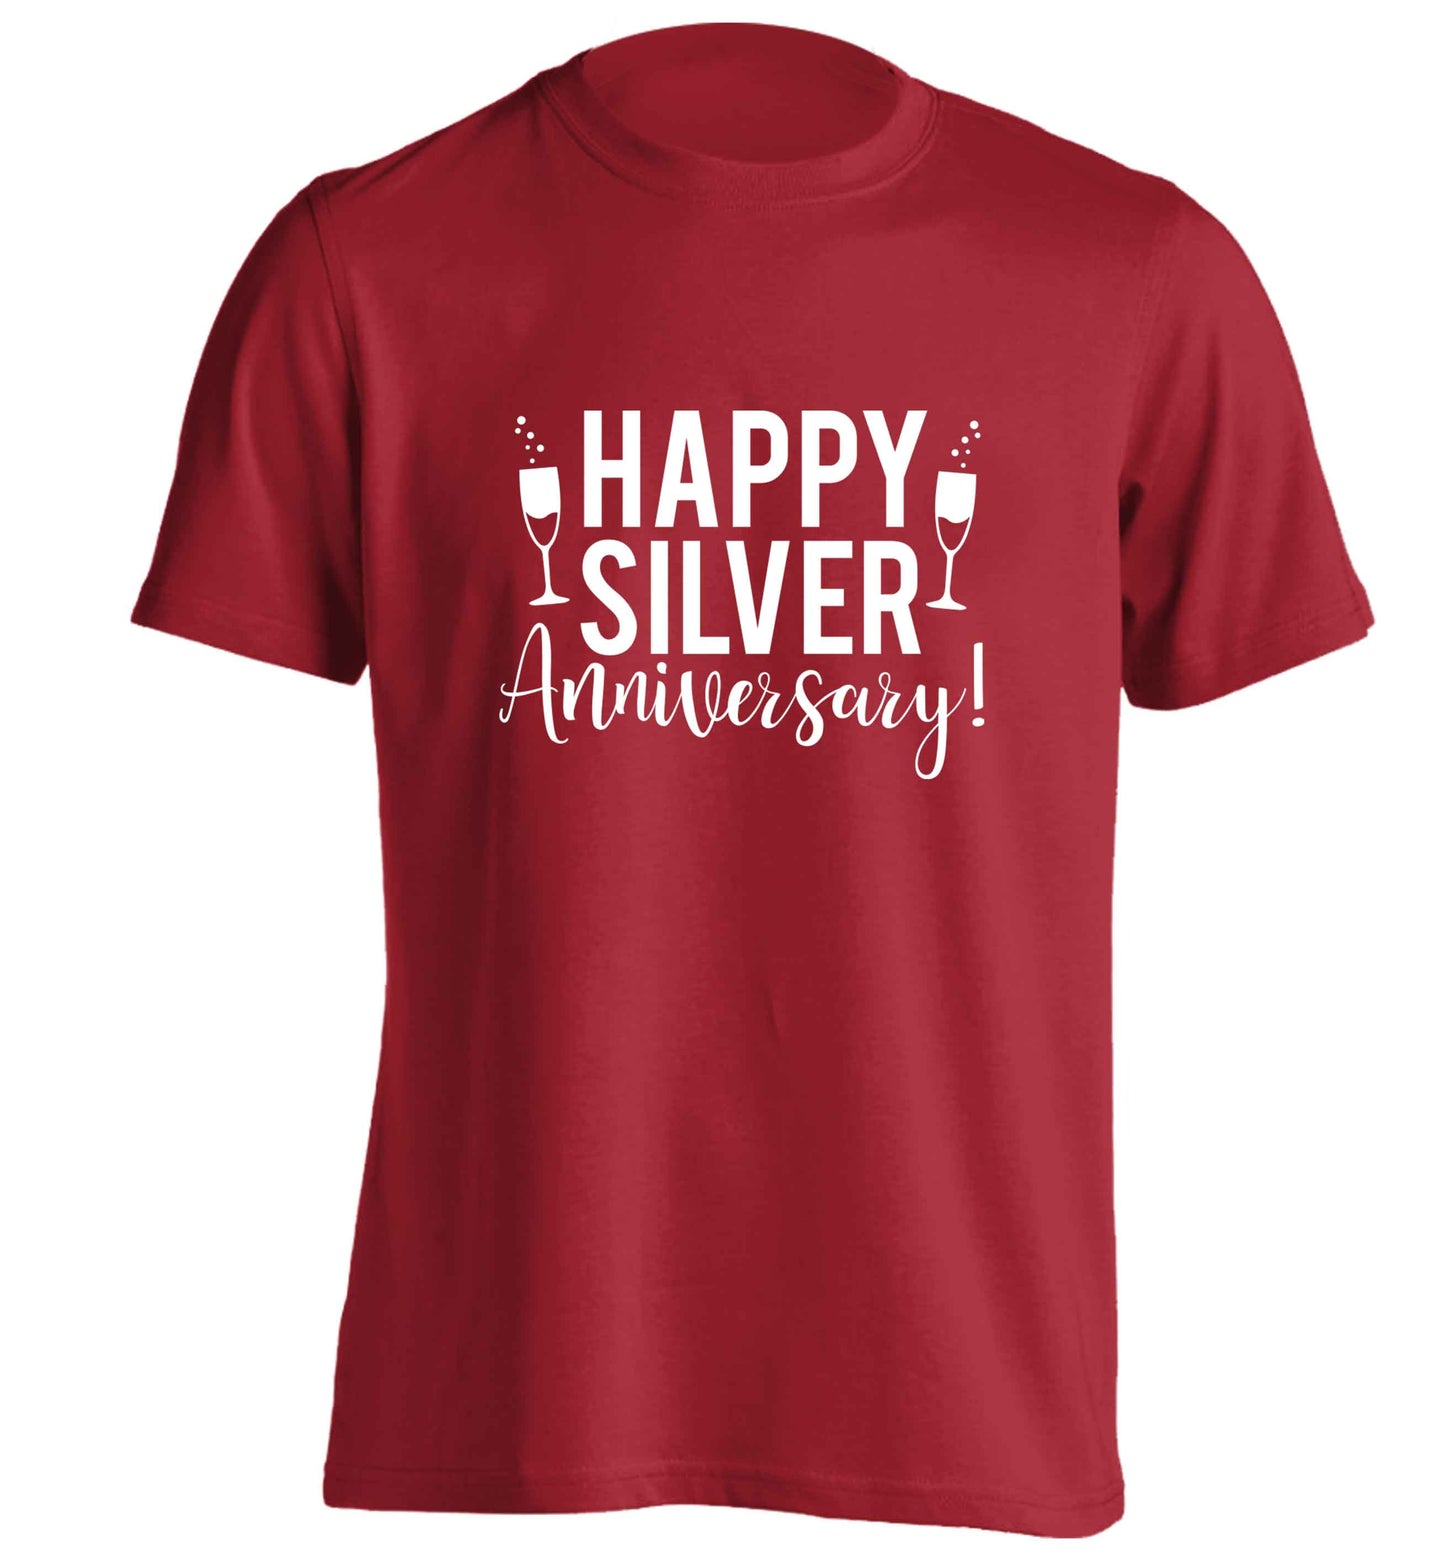 Happy silver anniversary! adults unisex red Tshirt 2XL